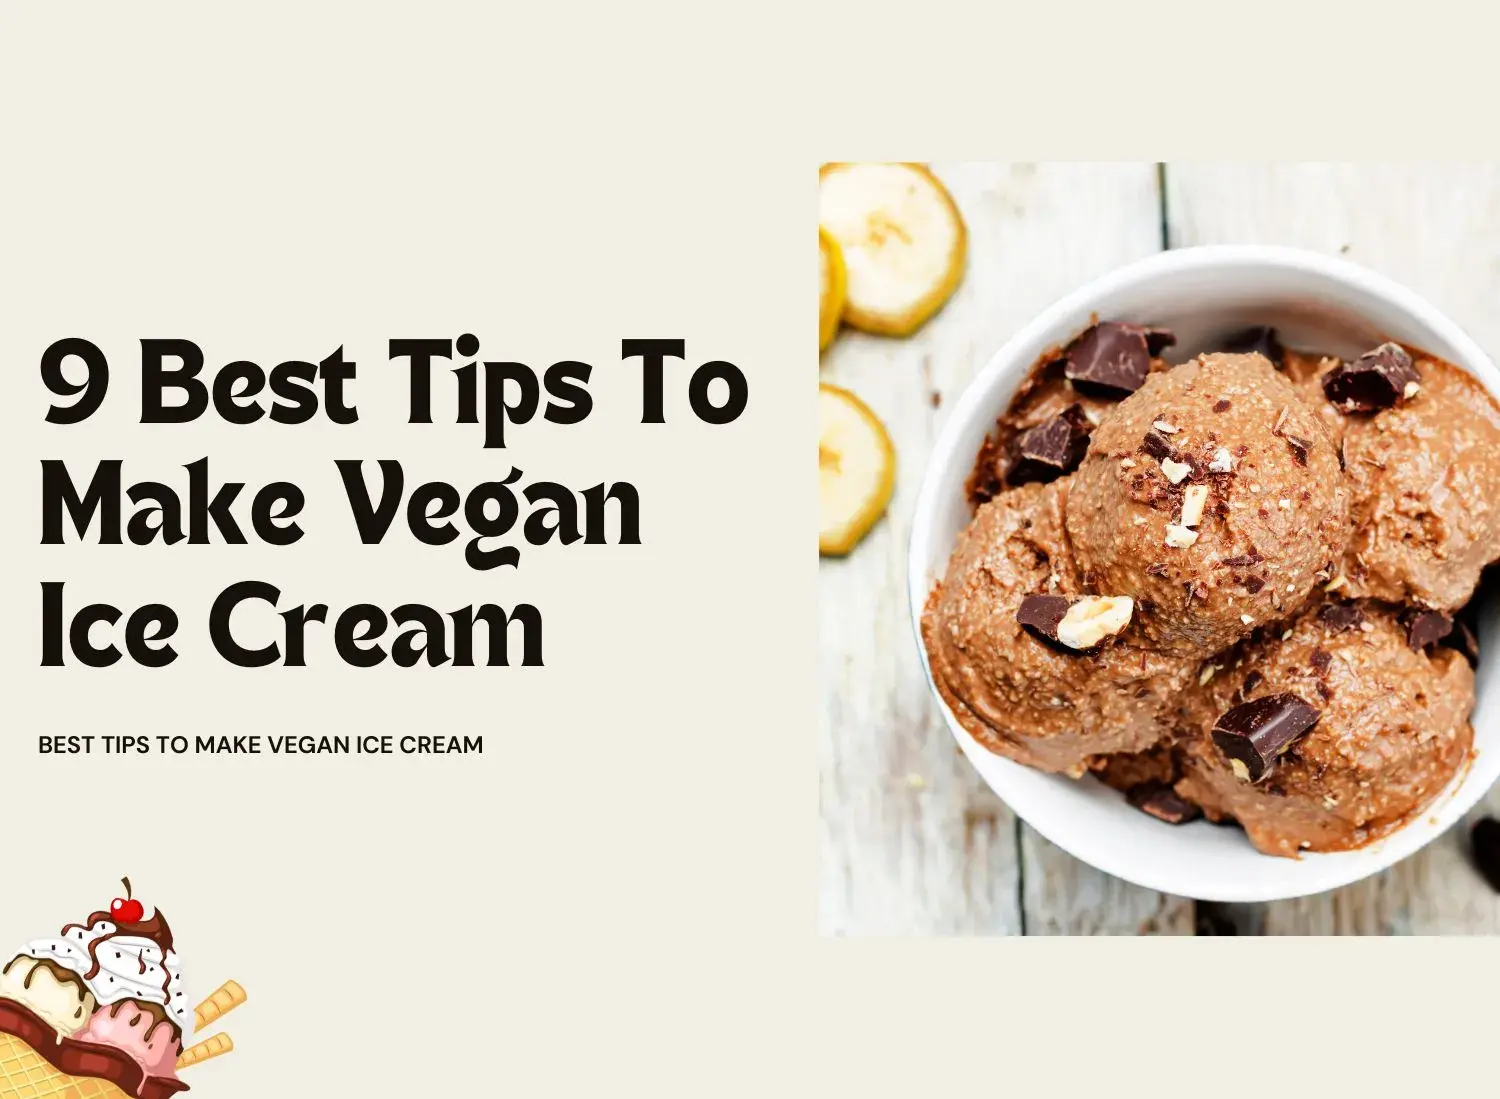 vegan ice cream making tips from home